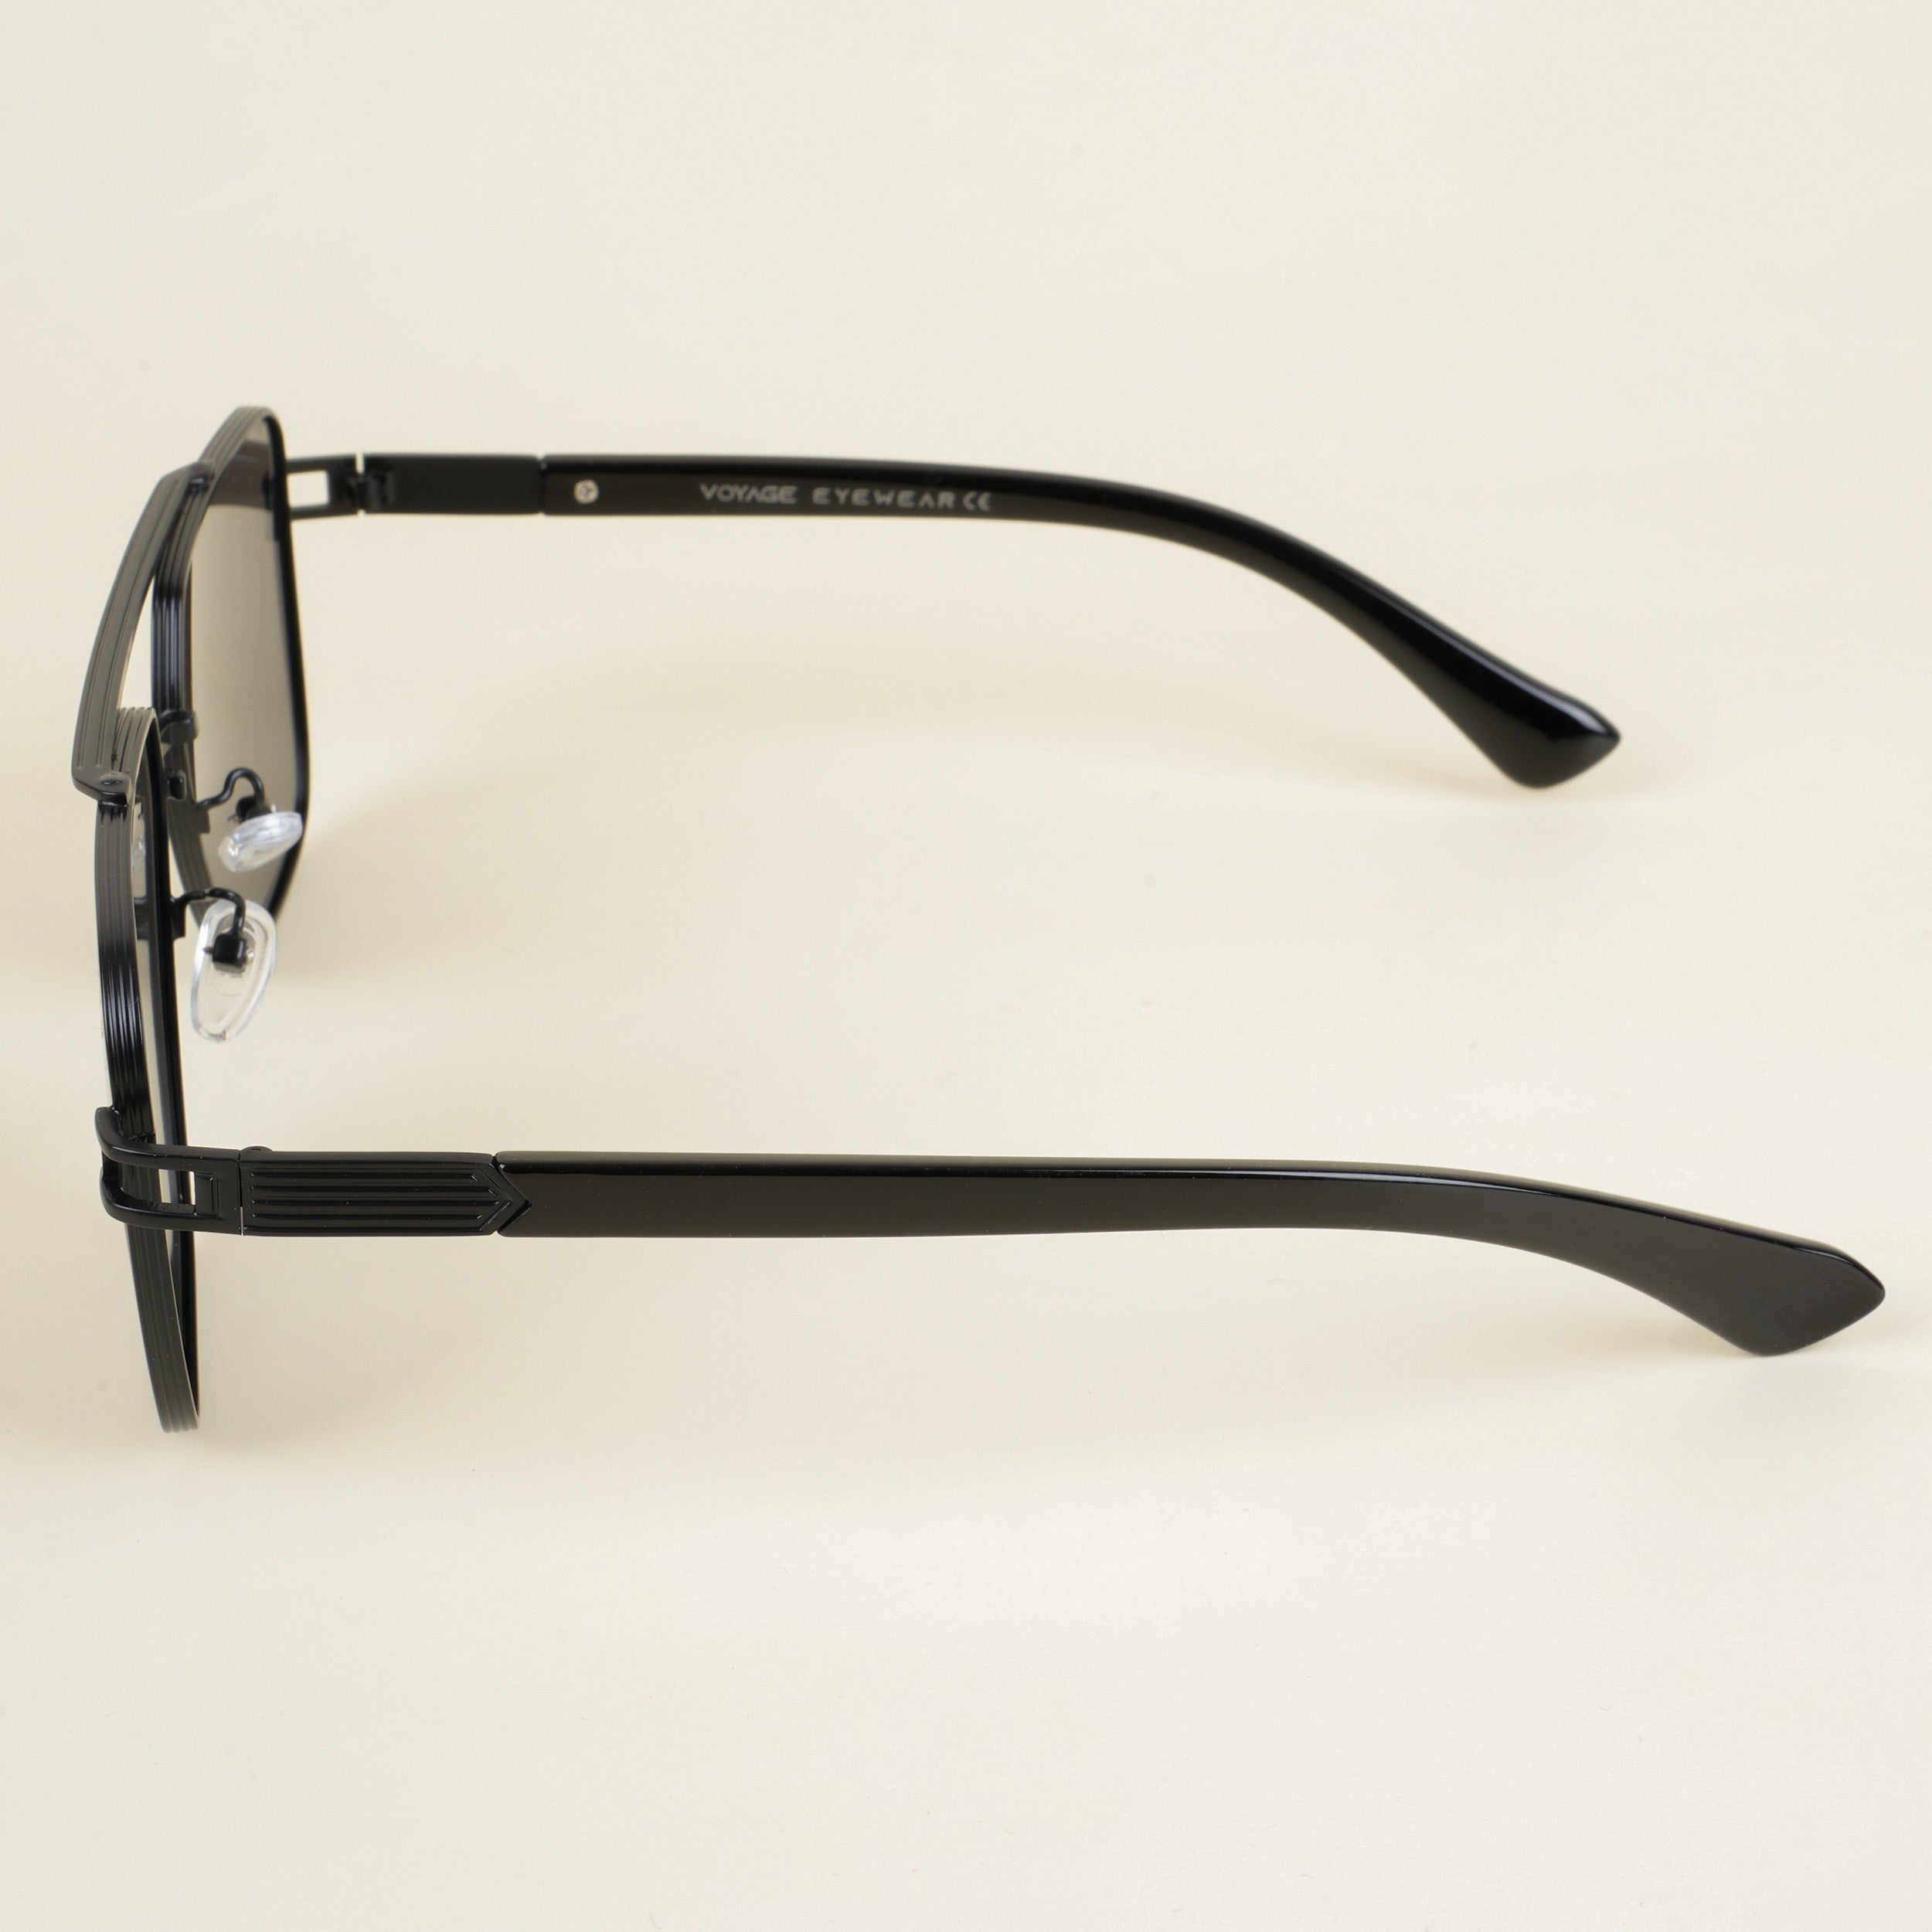 Voyage Wayfarer Sunglasses for Men & Women (Grey Lens | Black Frame - MG5236)